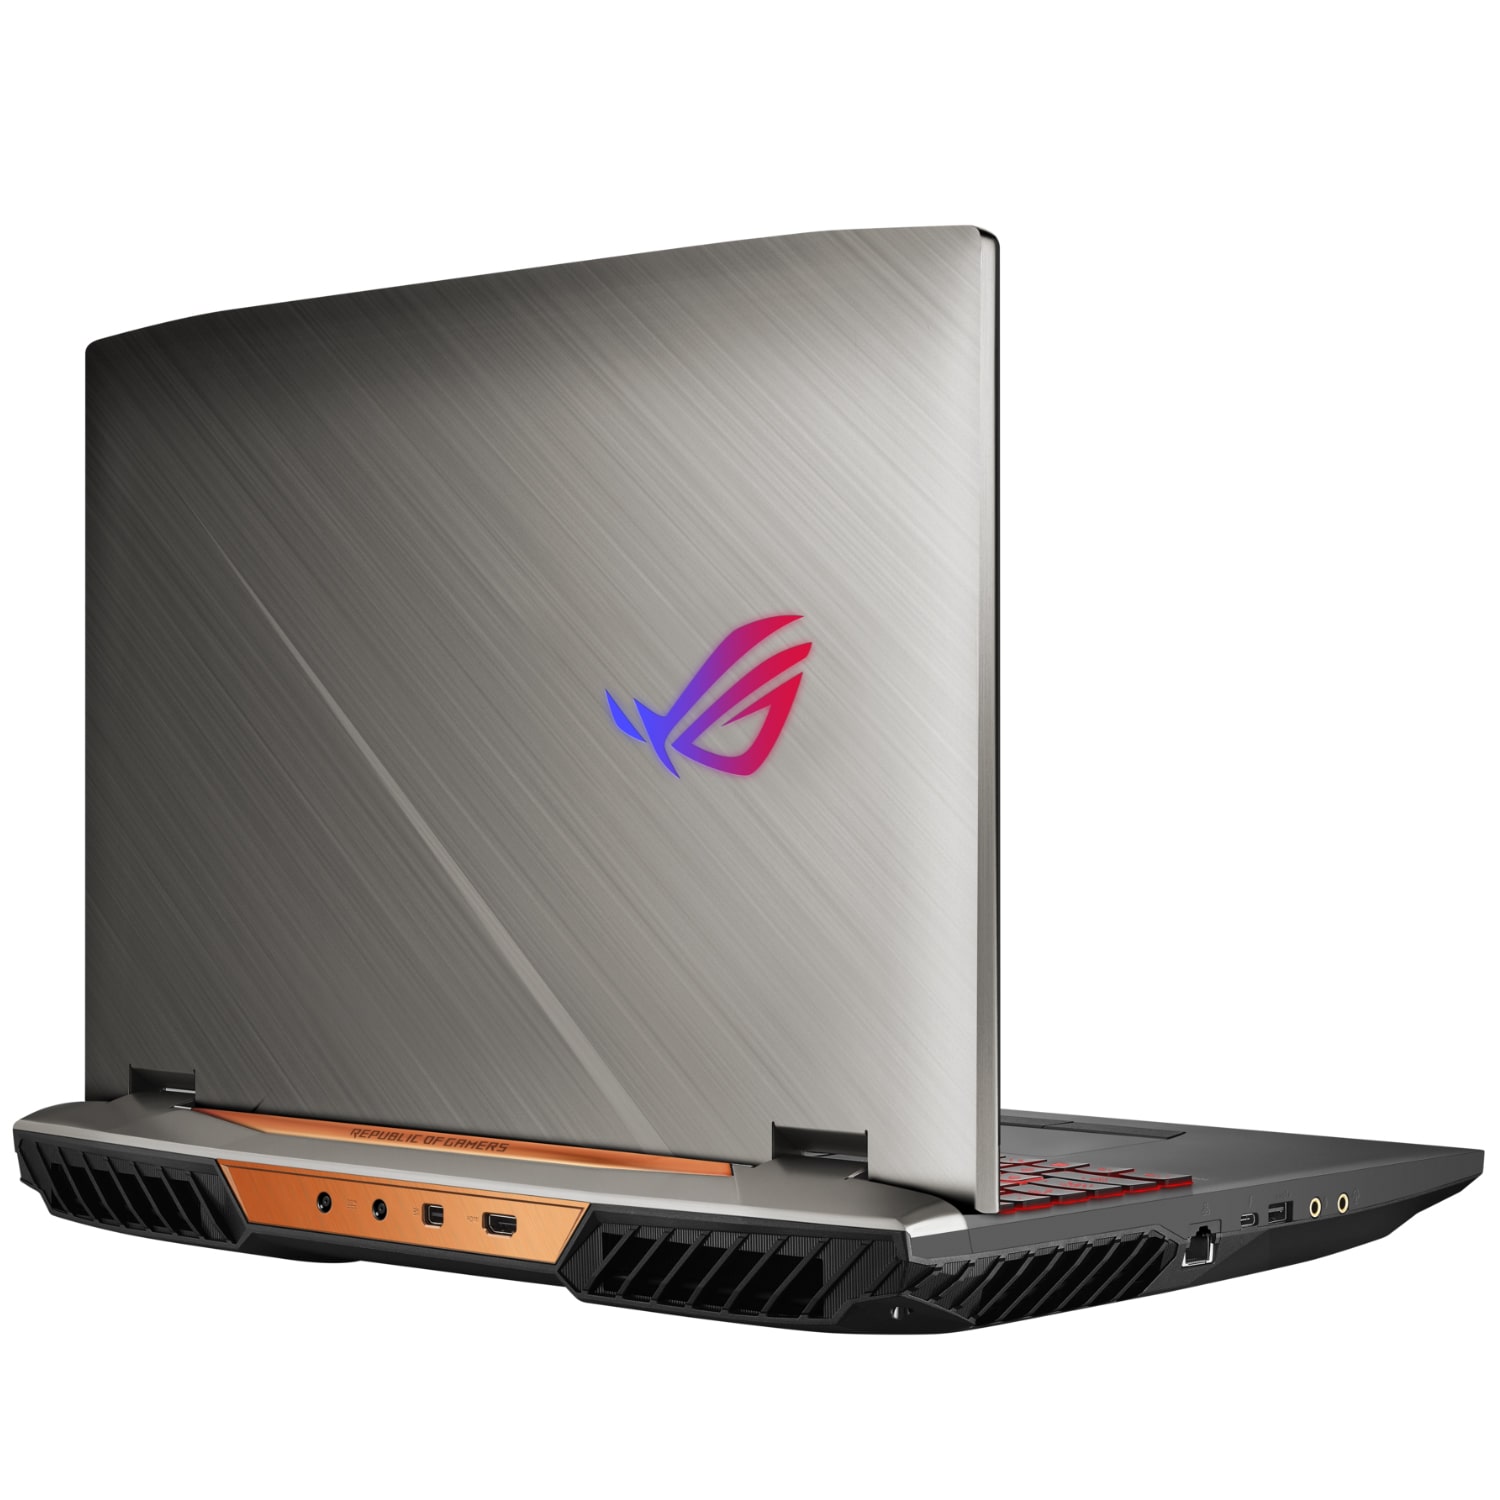 Asus Rog G703gx Gaming Laptop 173” Fhd 144hz G Sync 8th Generation